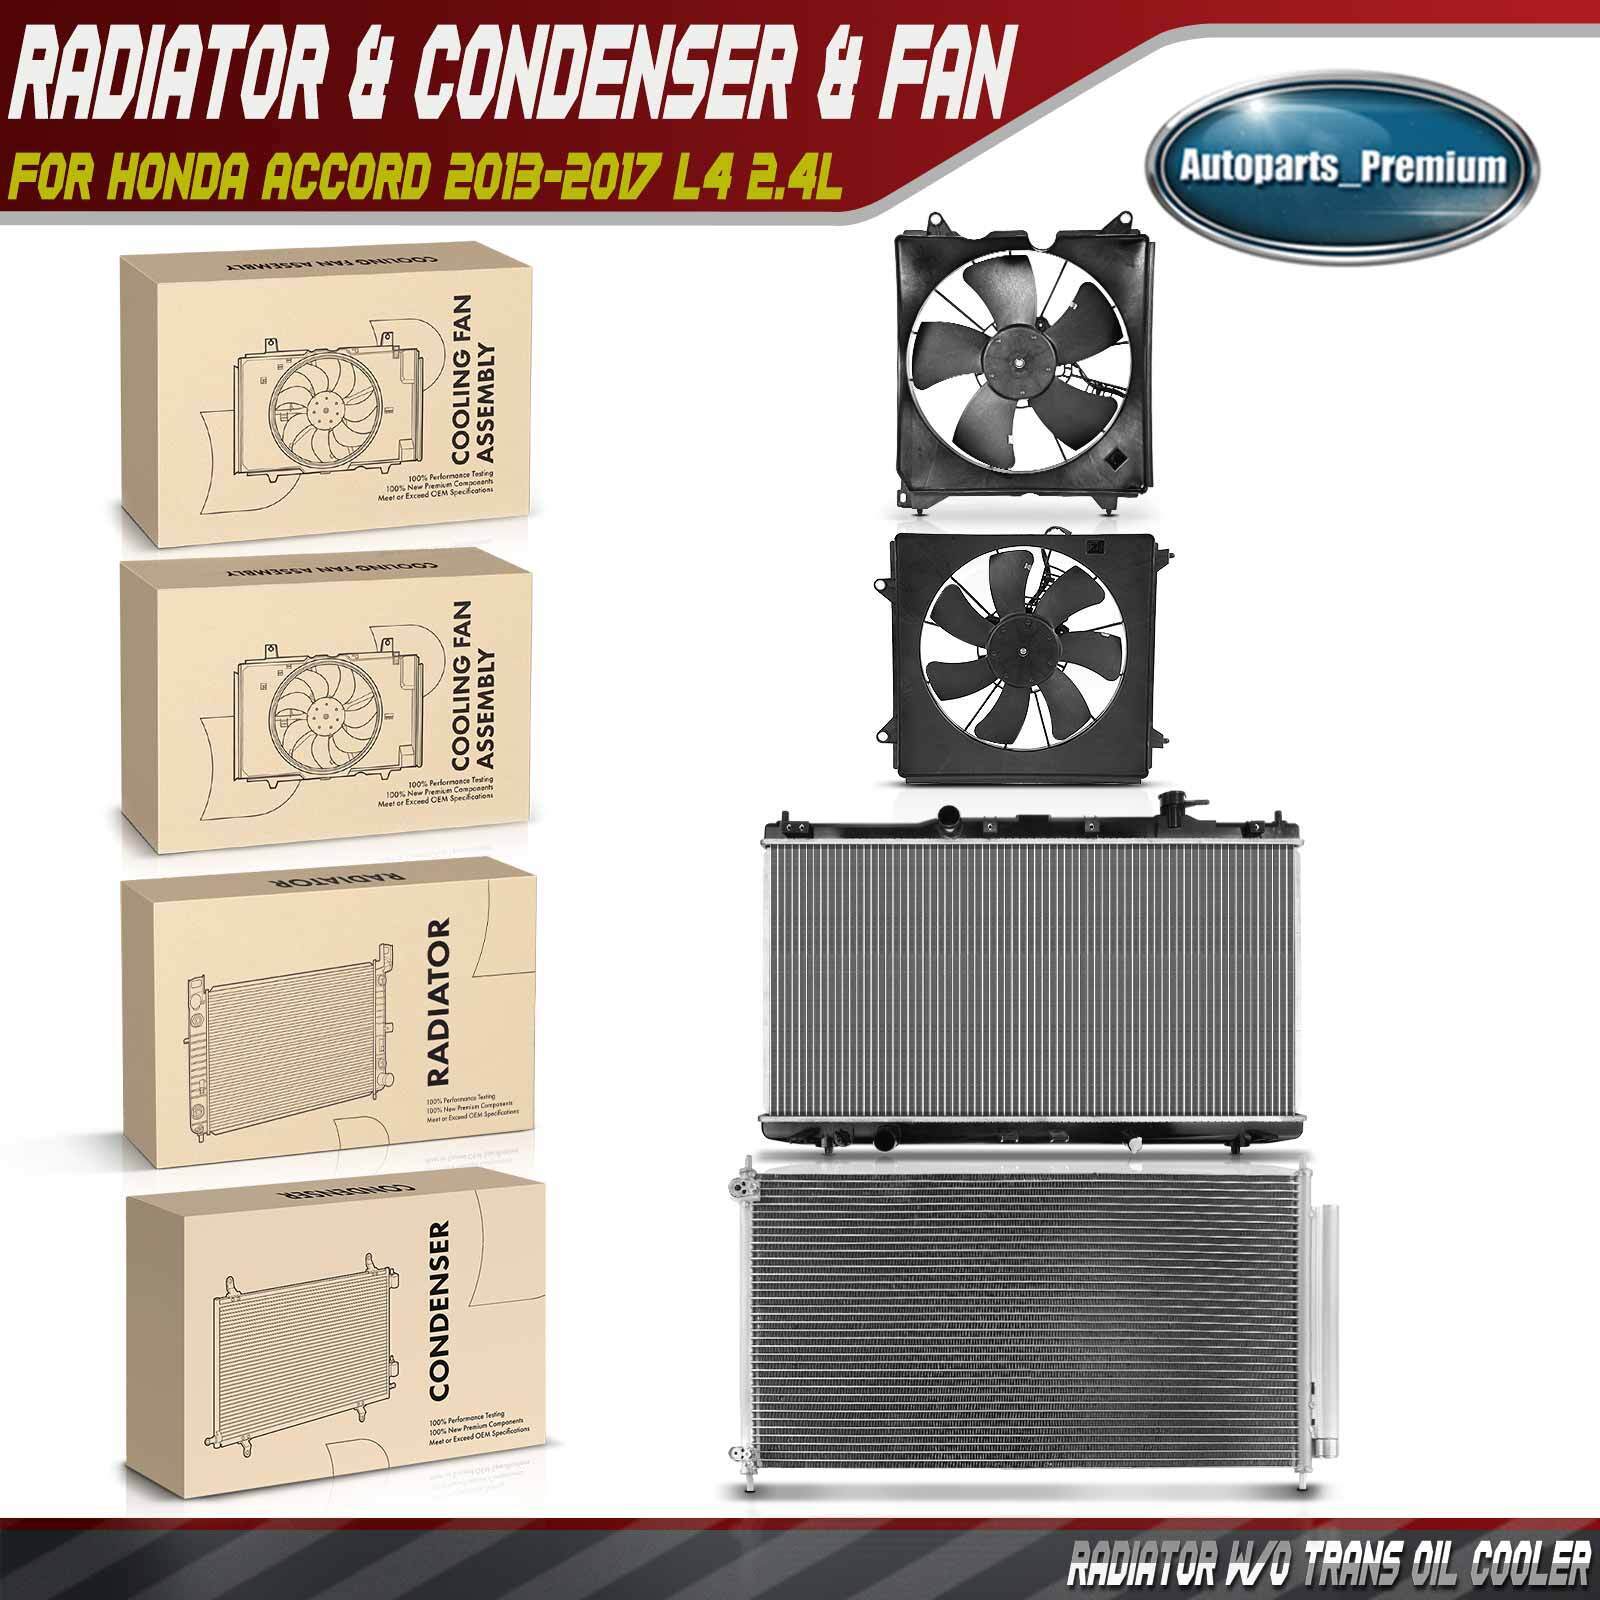 4x Radiator & AC Condenser & Cooling Fan Kit for Honda Accord 2013-2017 L4 2.4L